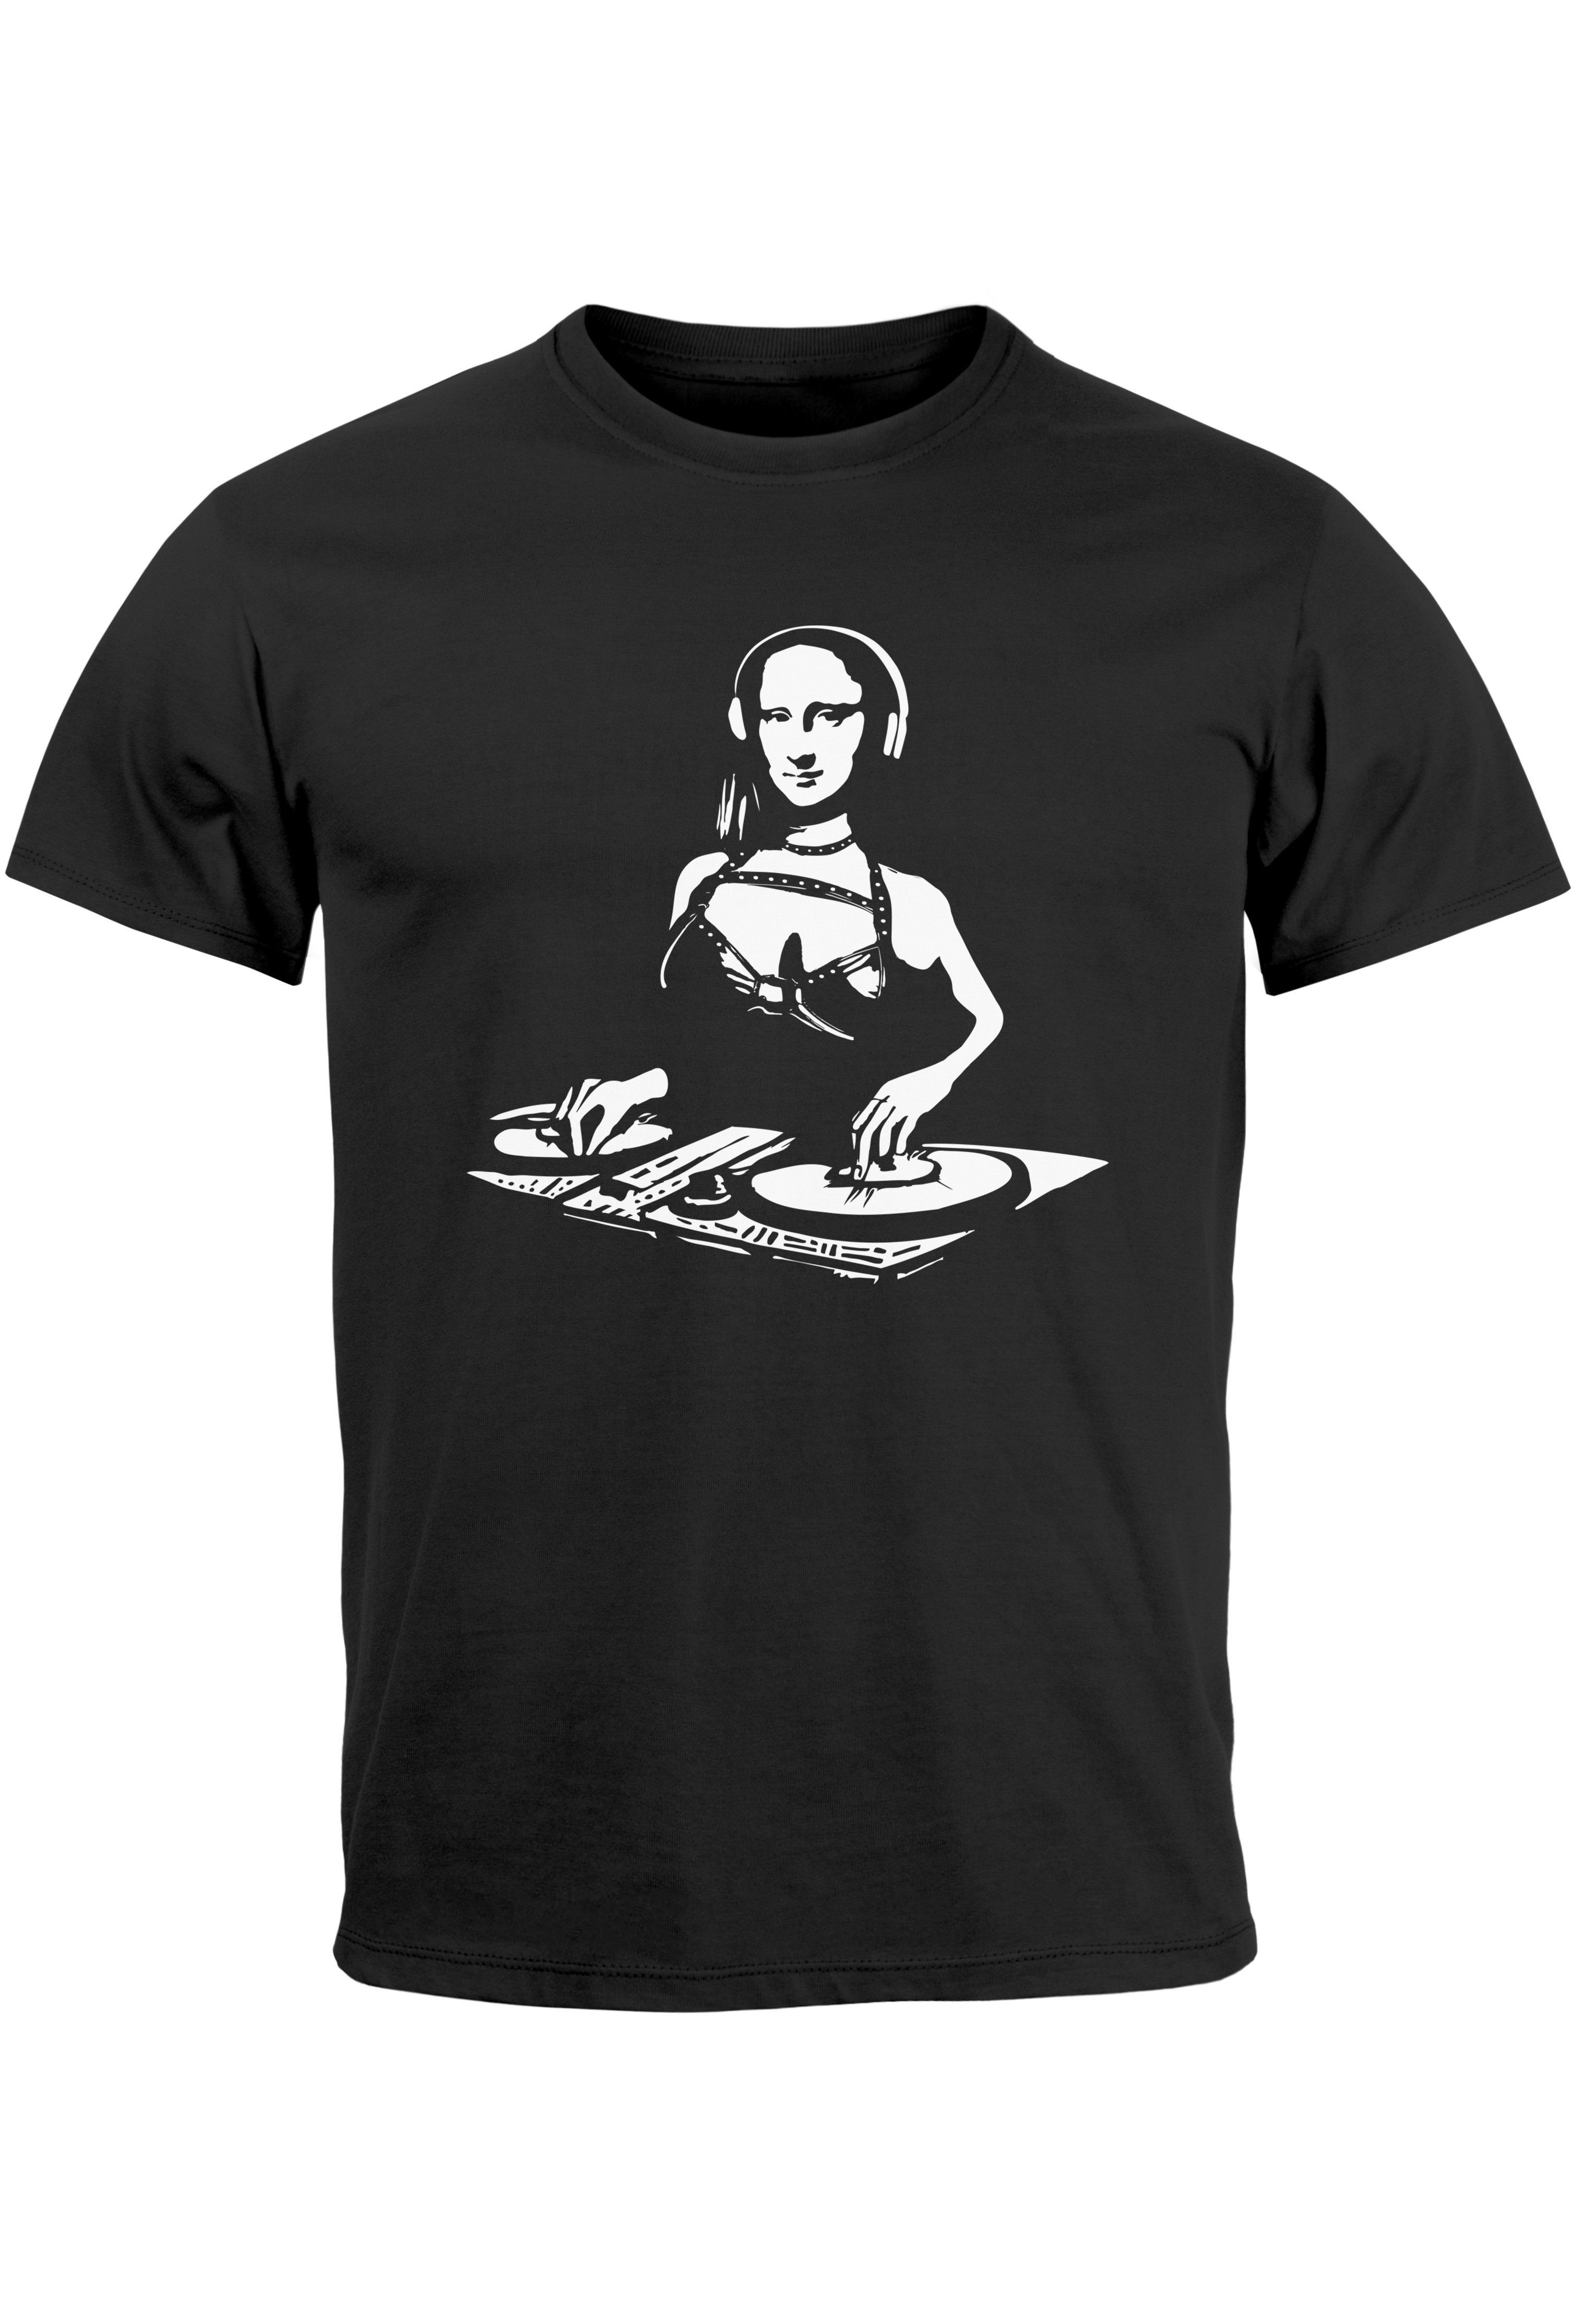 DJ Print Music mit Print-Shirt T-Shirt Herren Mona Techno Lisa Rave Neverless Fash Festival Electronic schwarz